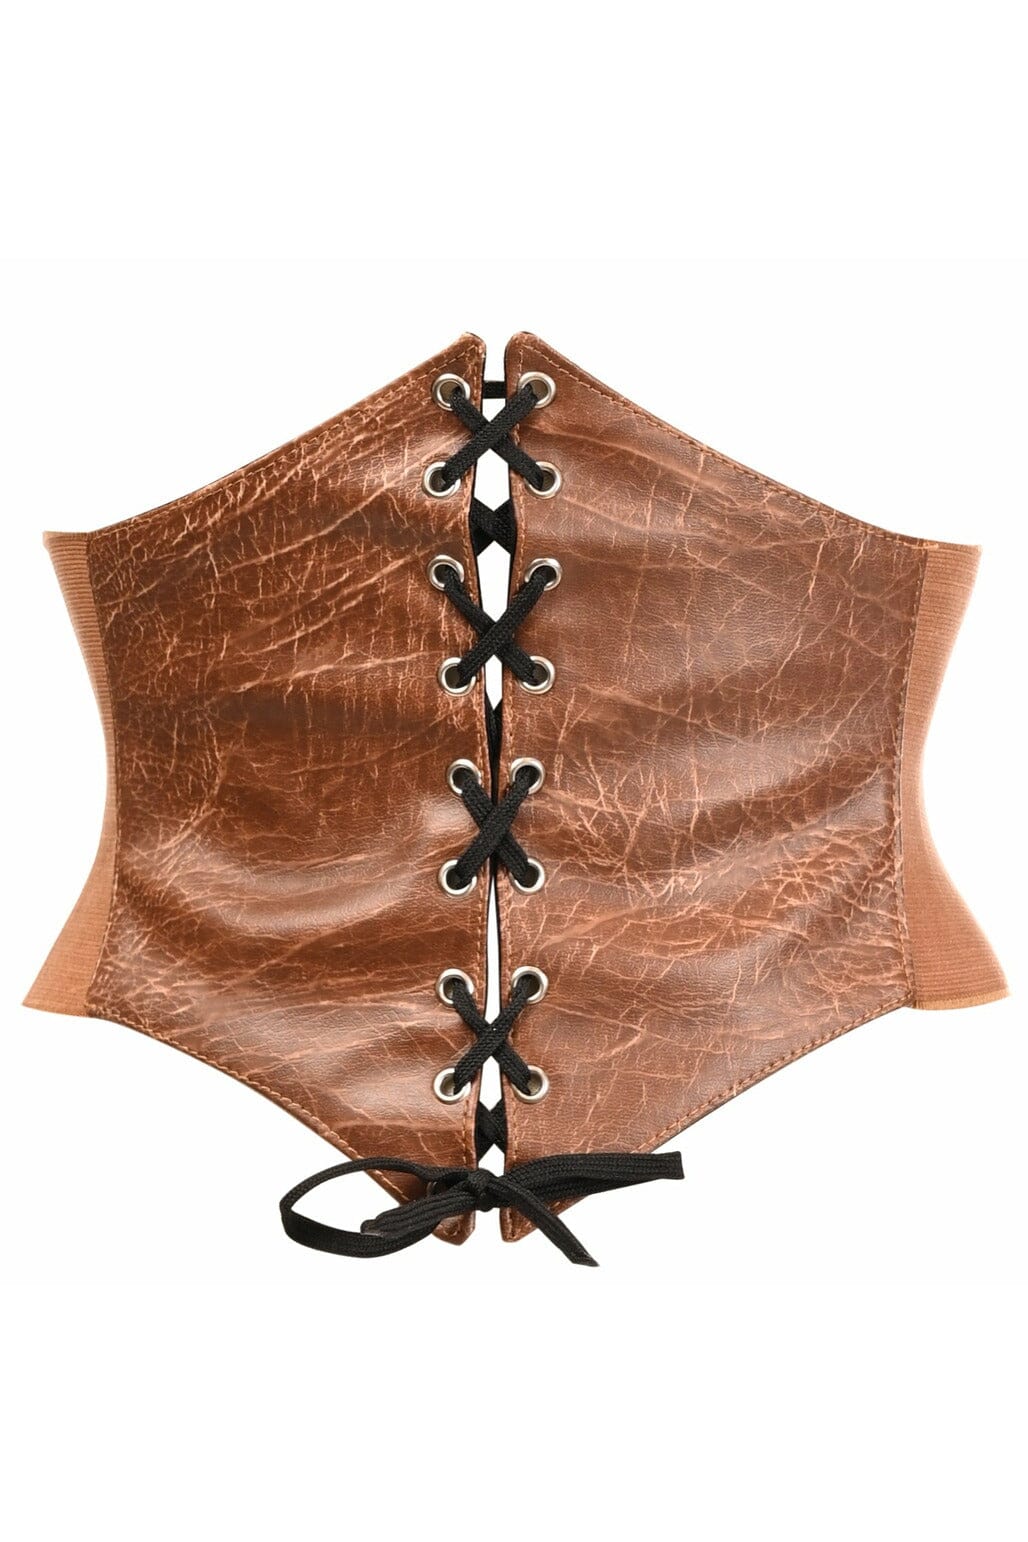 Lavish Distressed Brown Faux Leather Corset Belt-Corset Belts-Daisy Corsets-Brown-S-SEXYSHOES.COM